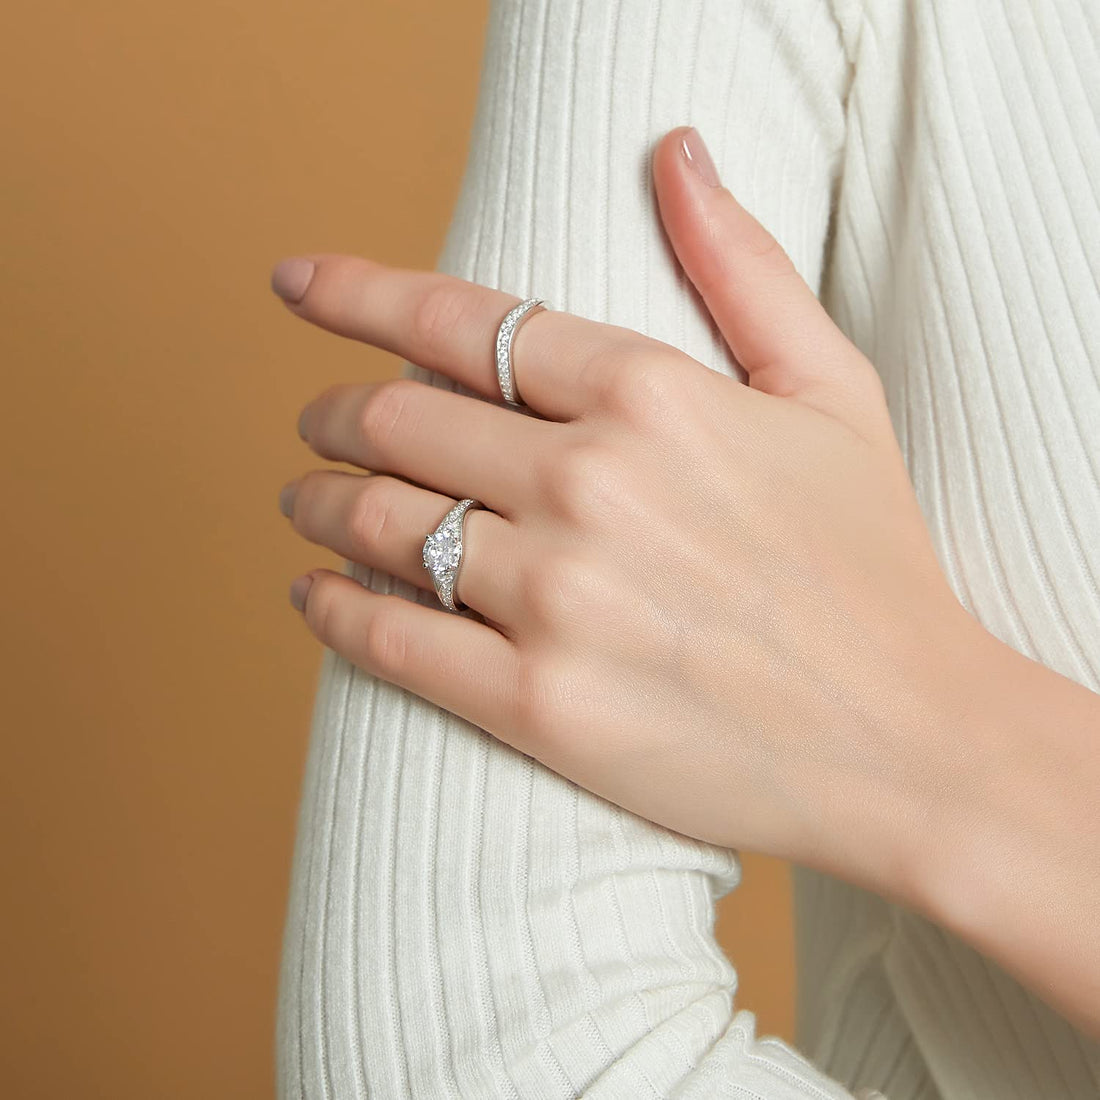 shiny engagement rings; women's weddin rings; Eamti;